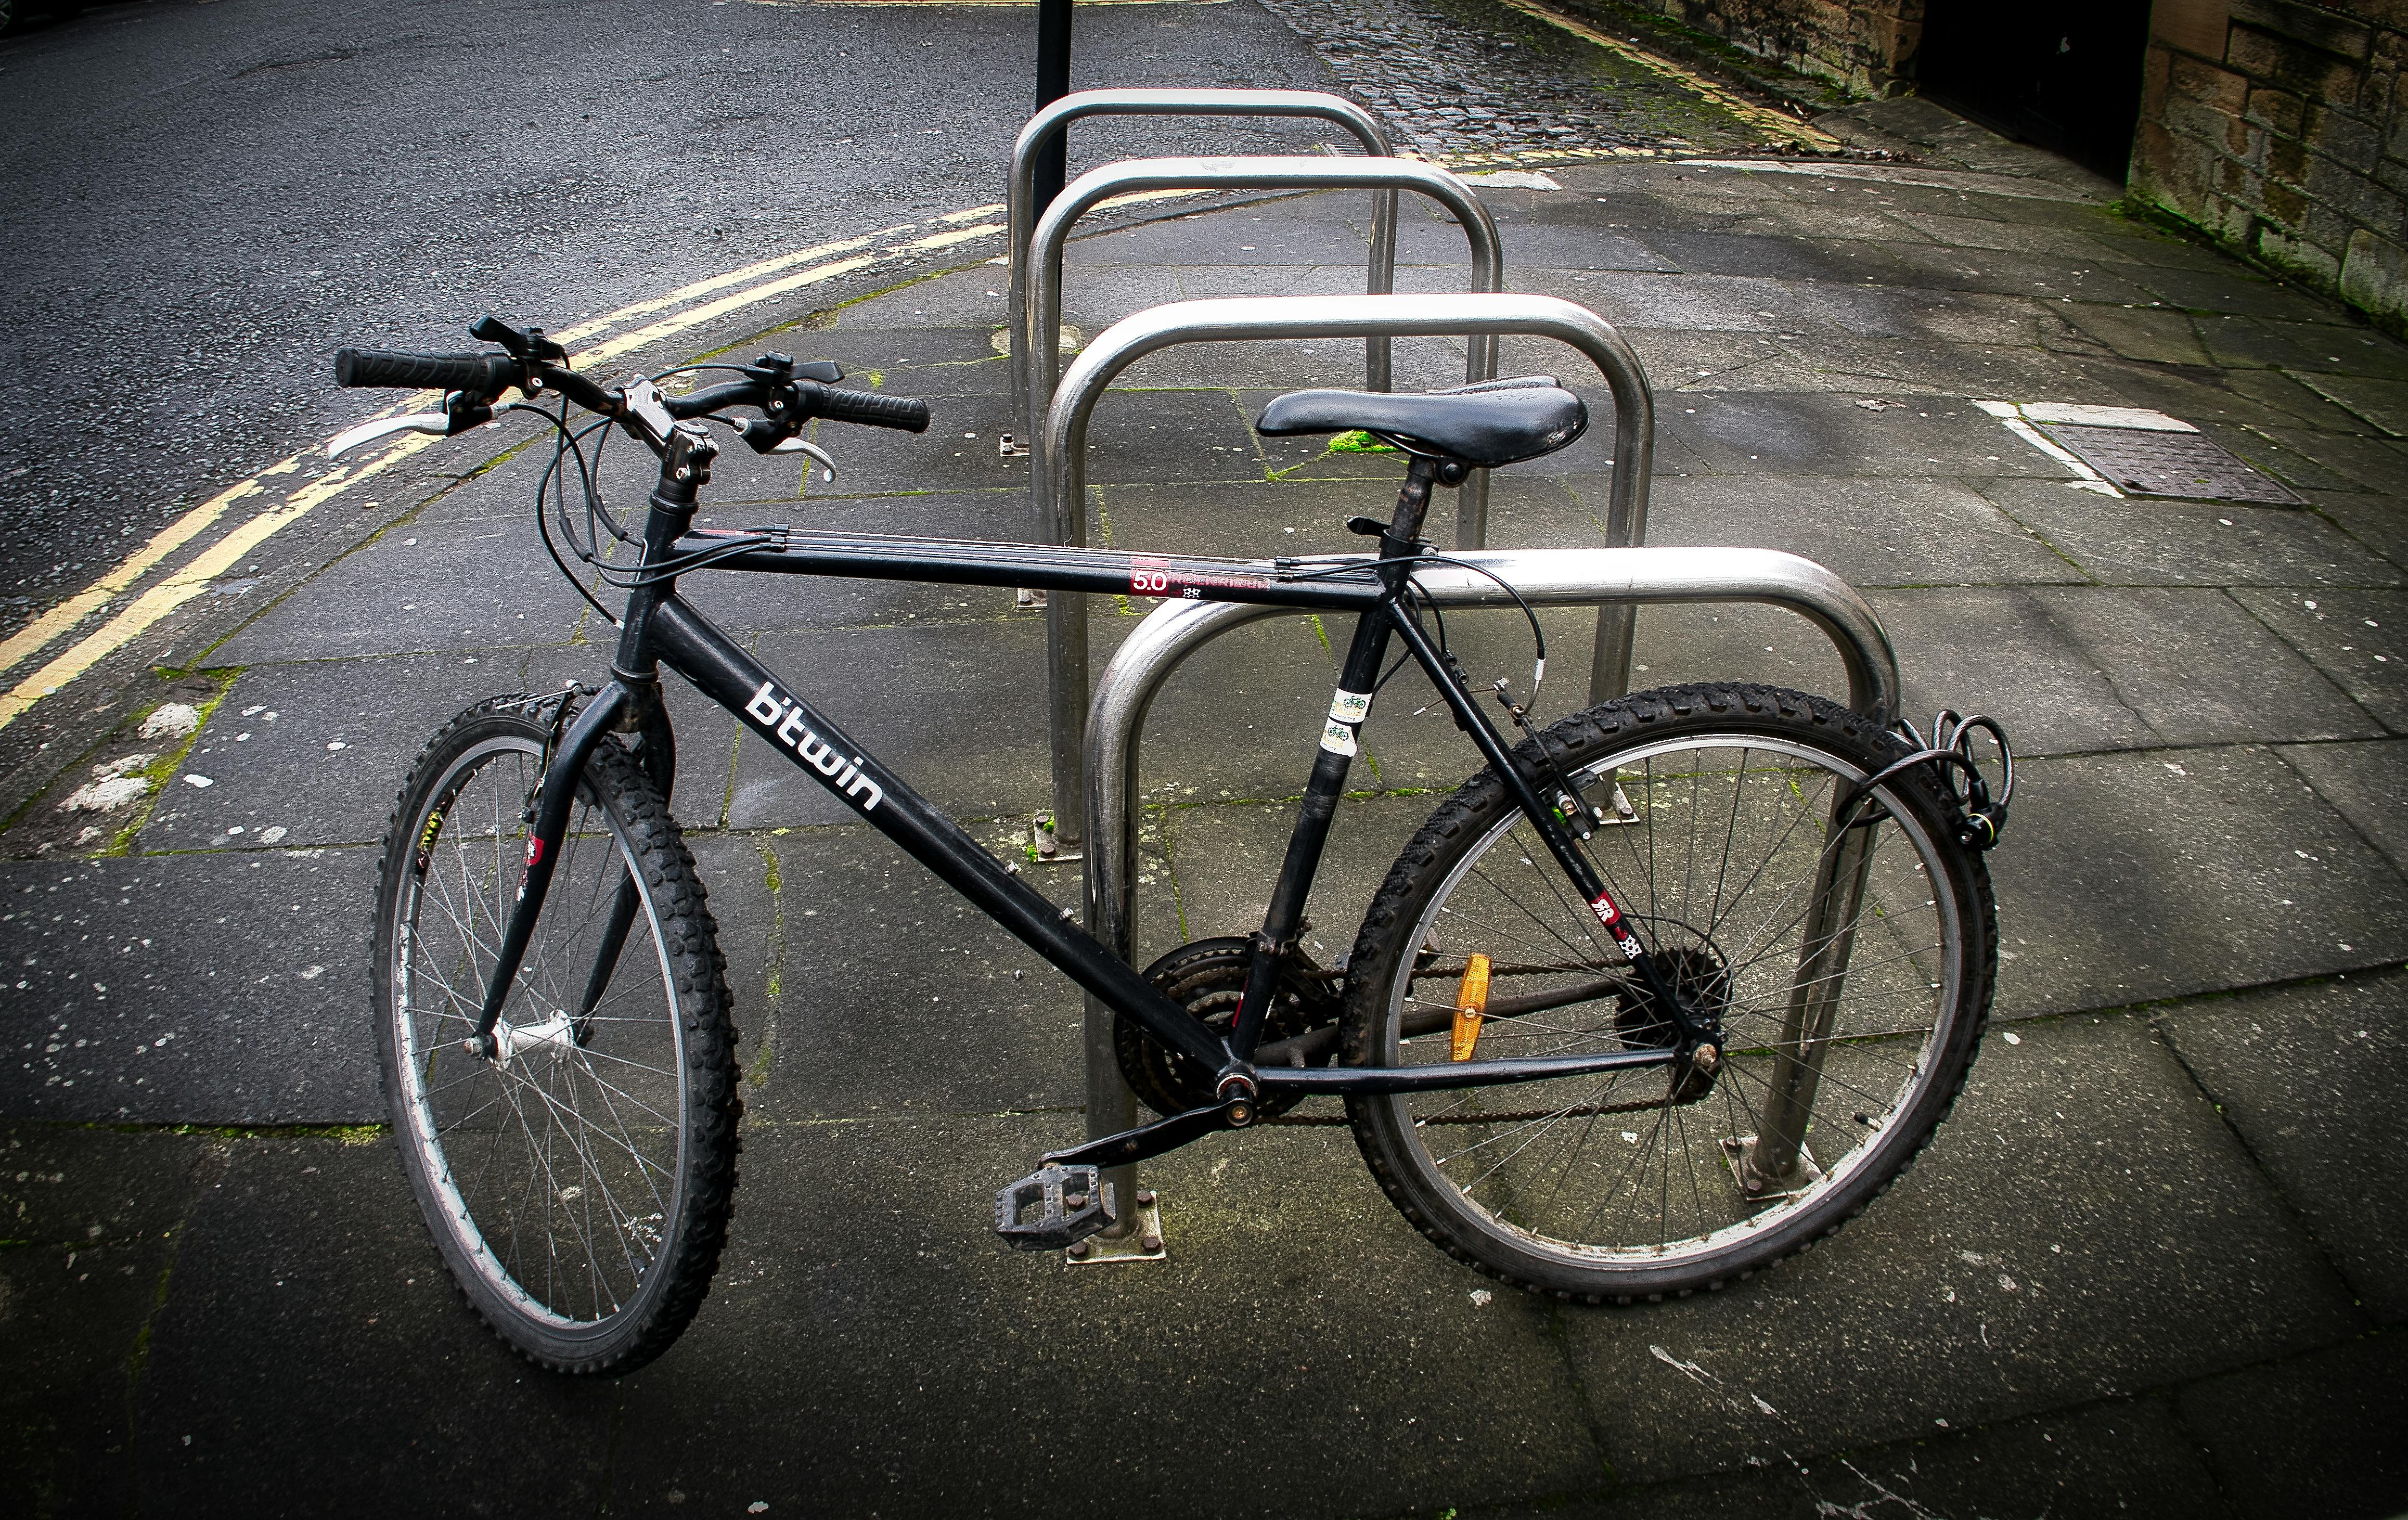 Free stock photo of bicycle, bicycle frame, bicycle lock